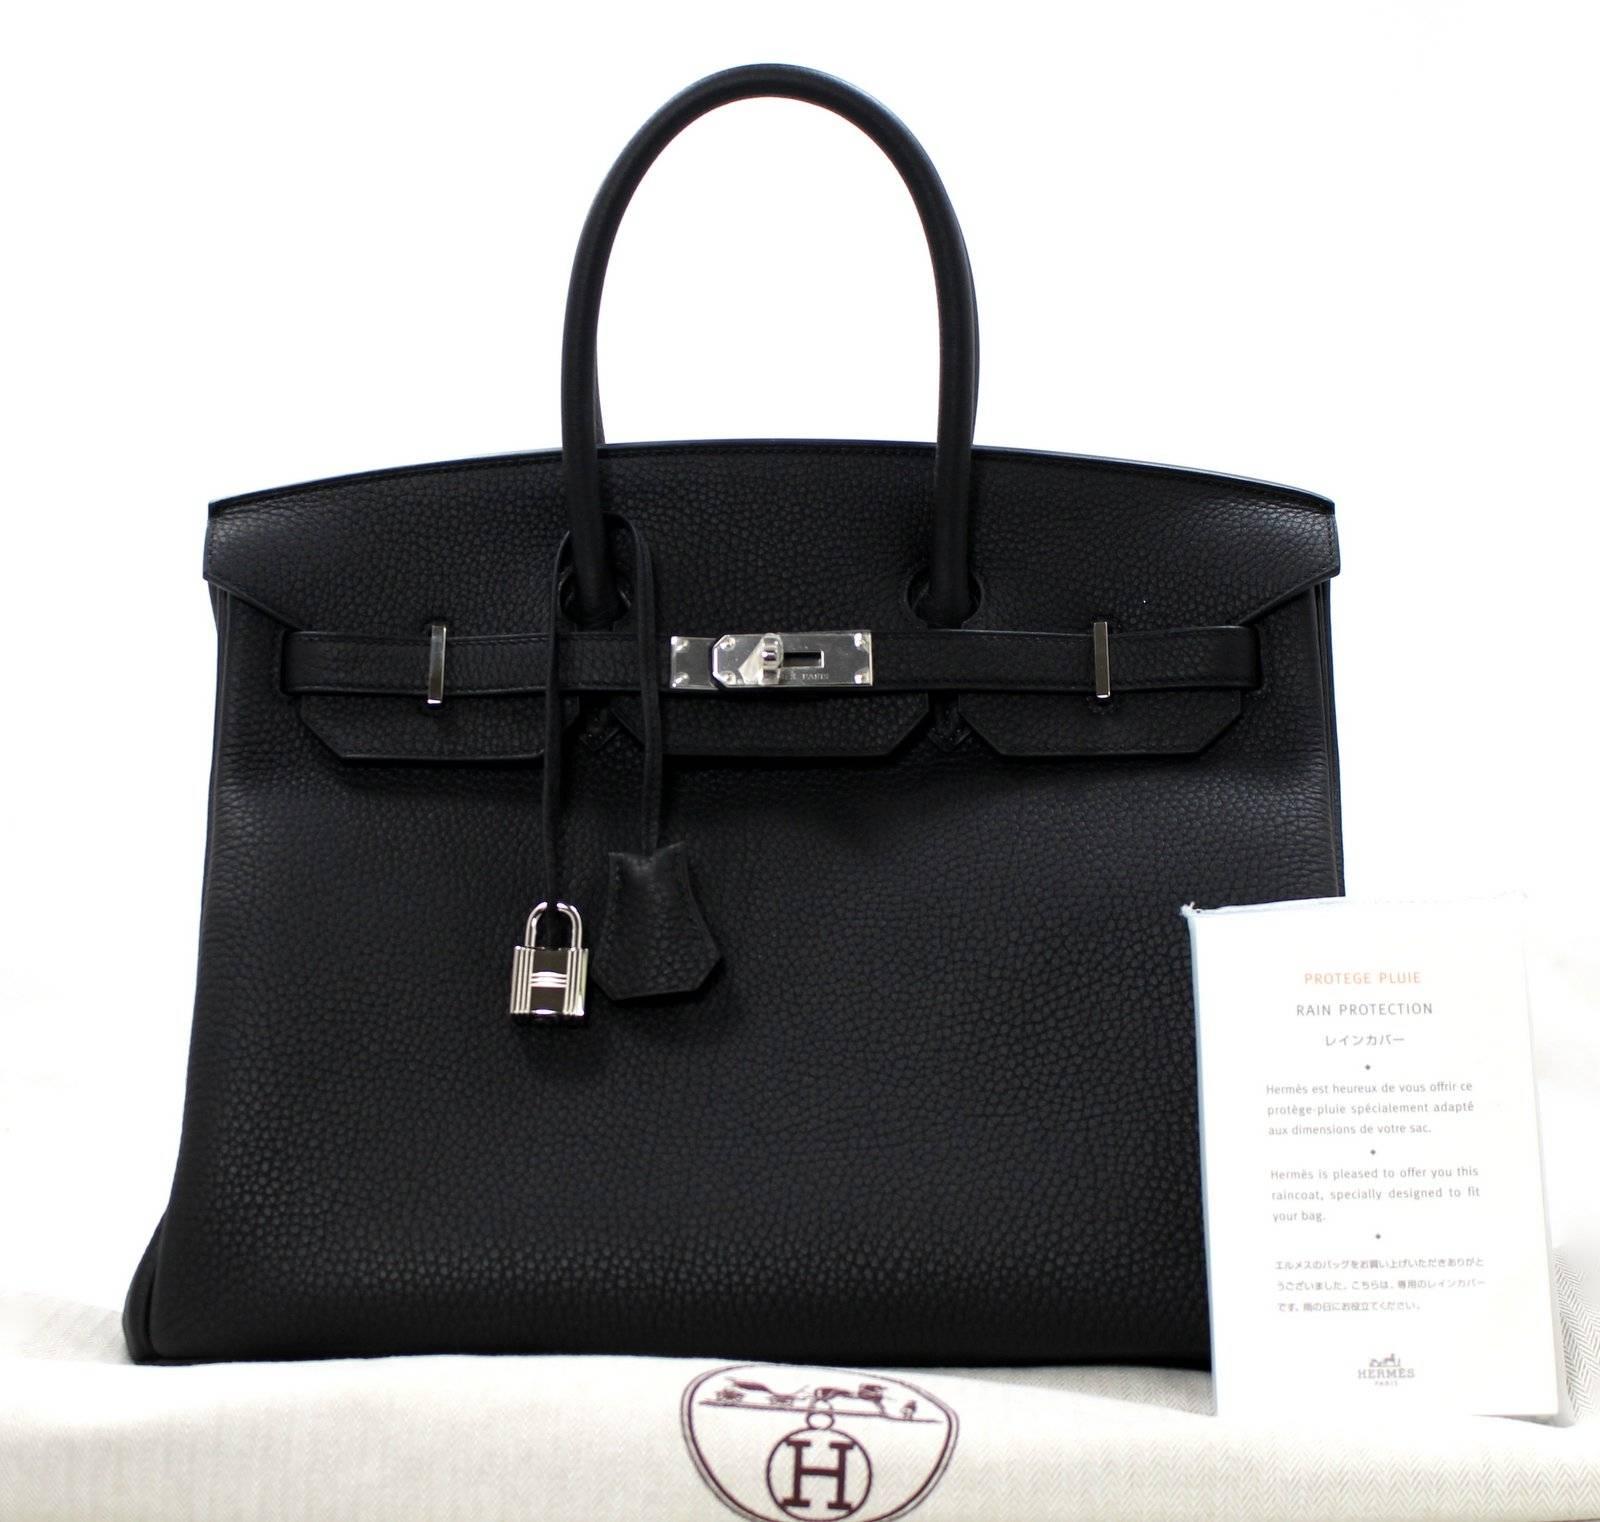 Hermès Black Togo Leather Birkin Bag- PHW, 35 cm size 6